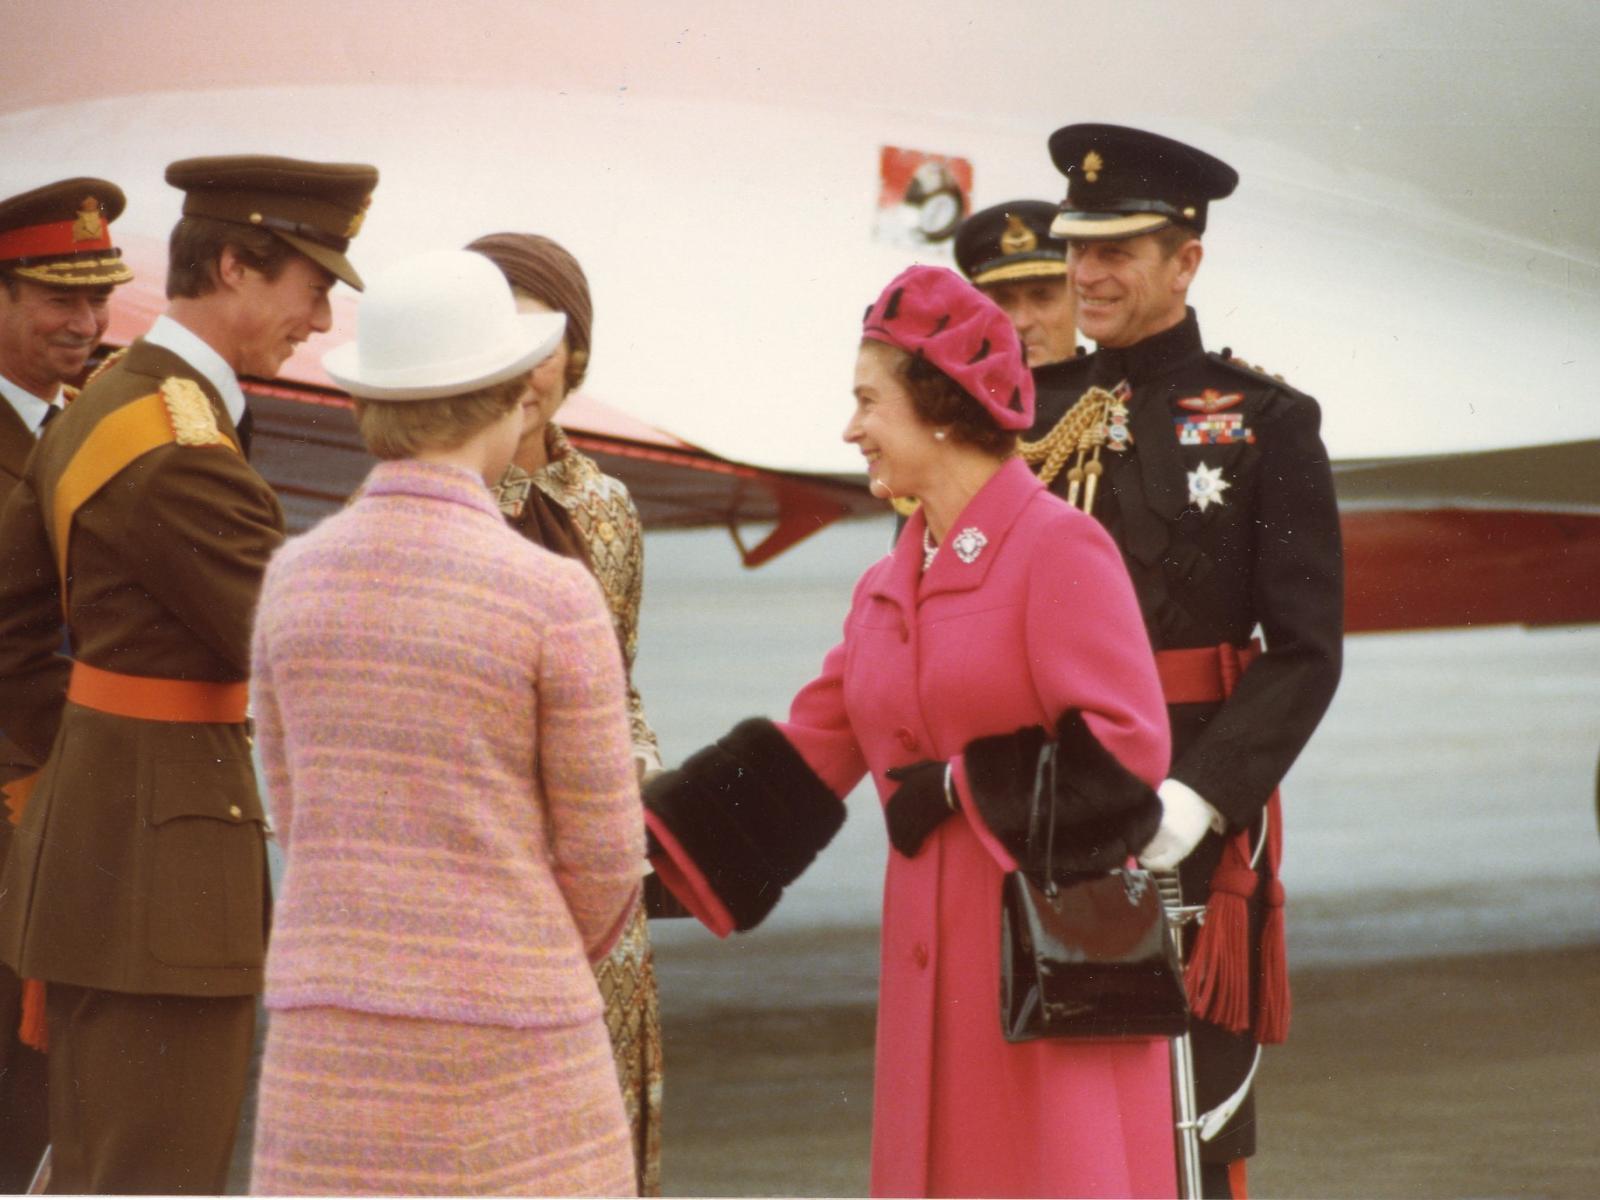 Her Majesty Queen Elizabeth II greeting the Grand Duke